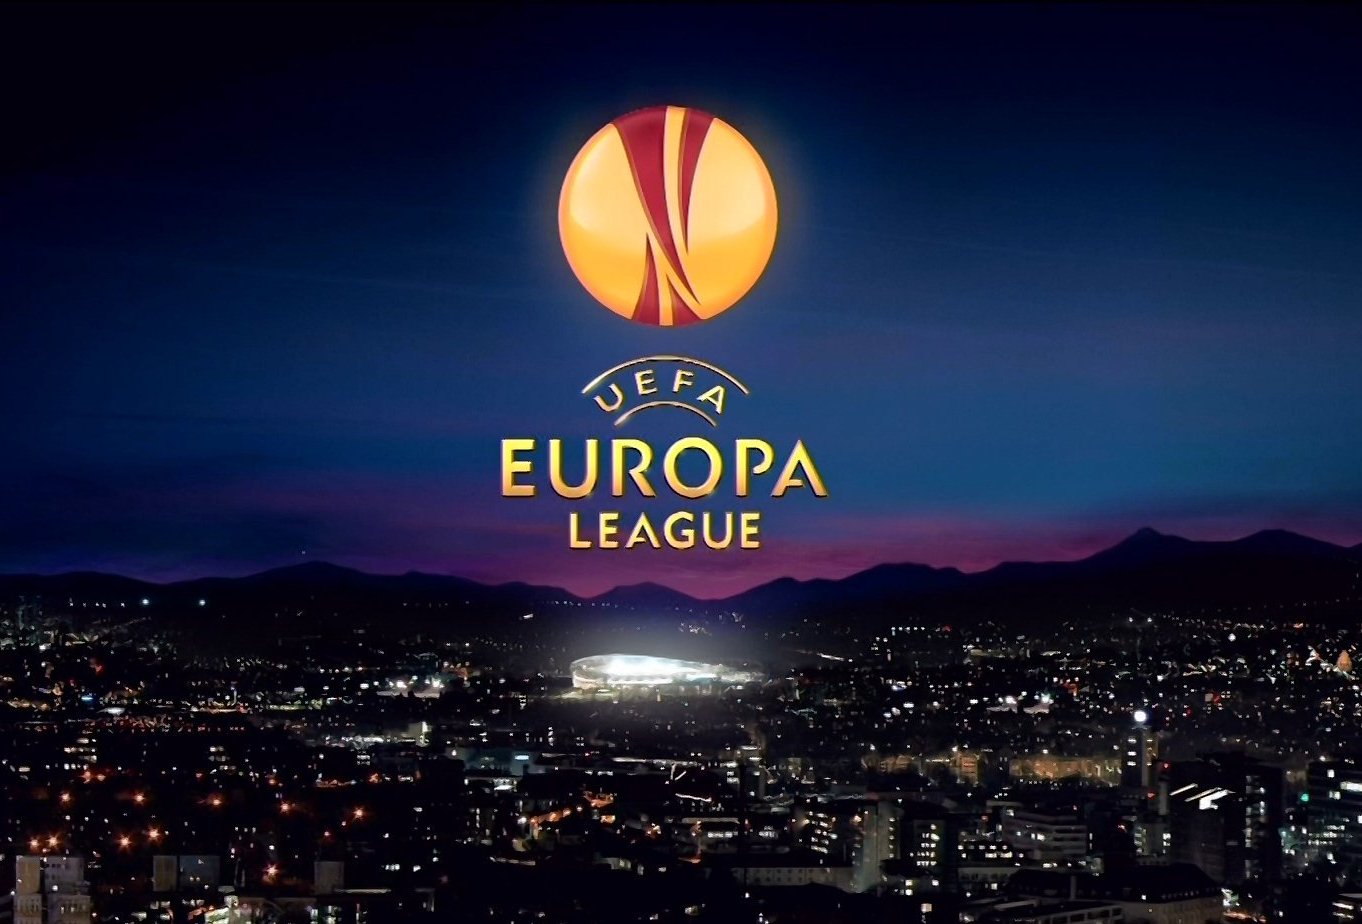 ترکیب منتخب لیگ اروپا - لوگوی لیگ اروپا - europa league